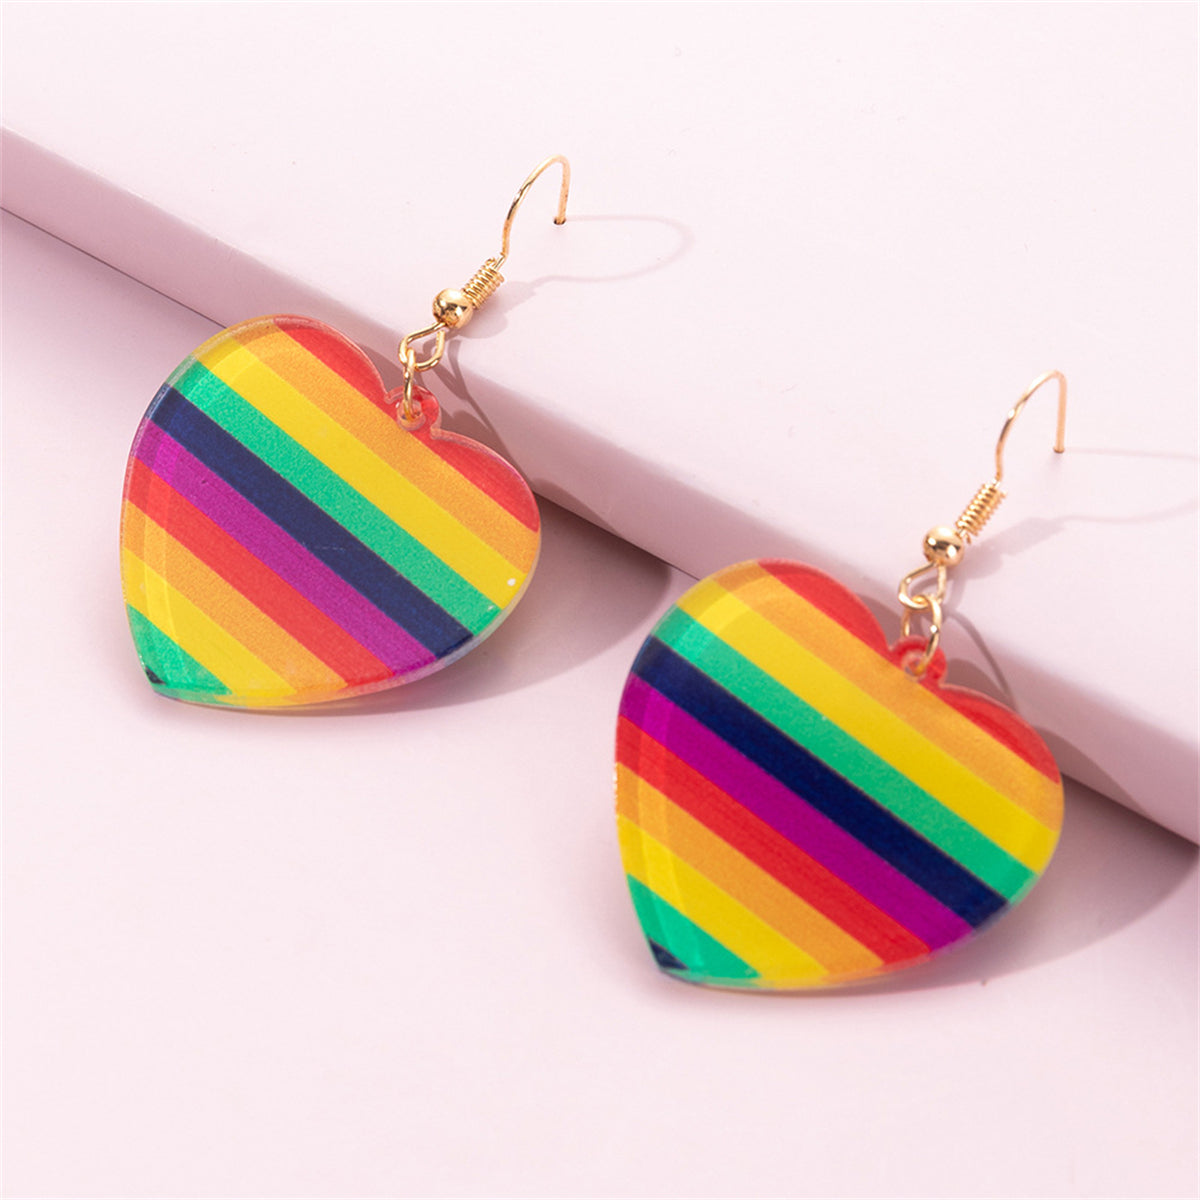 Acrylic & 18K Gold-Plated Rainbow Heart Drop Earrings